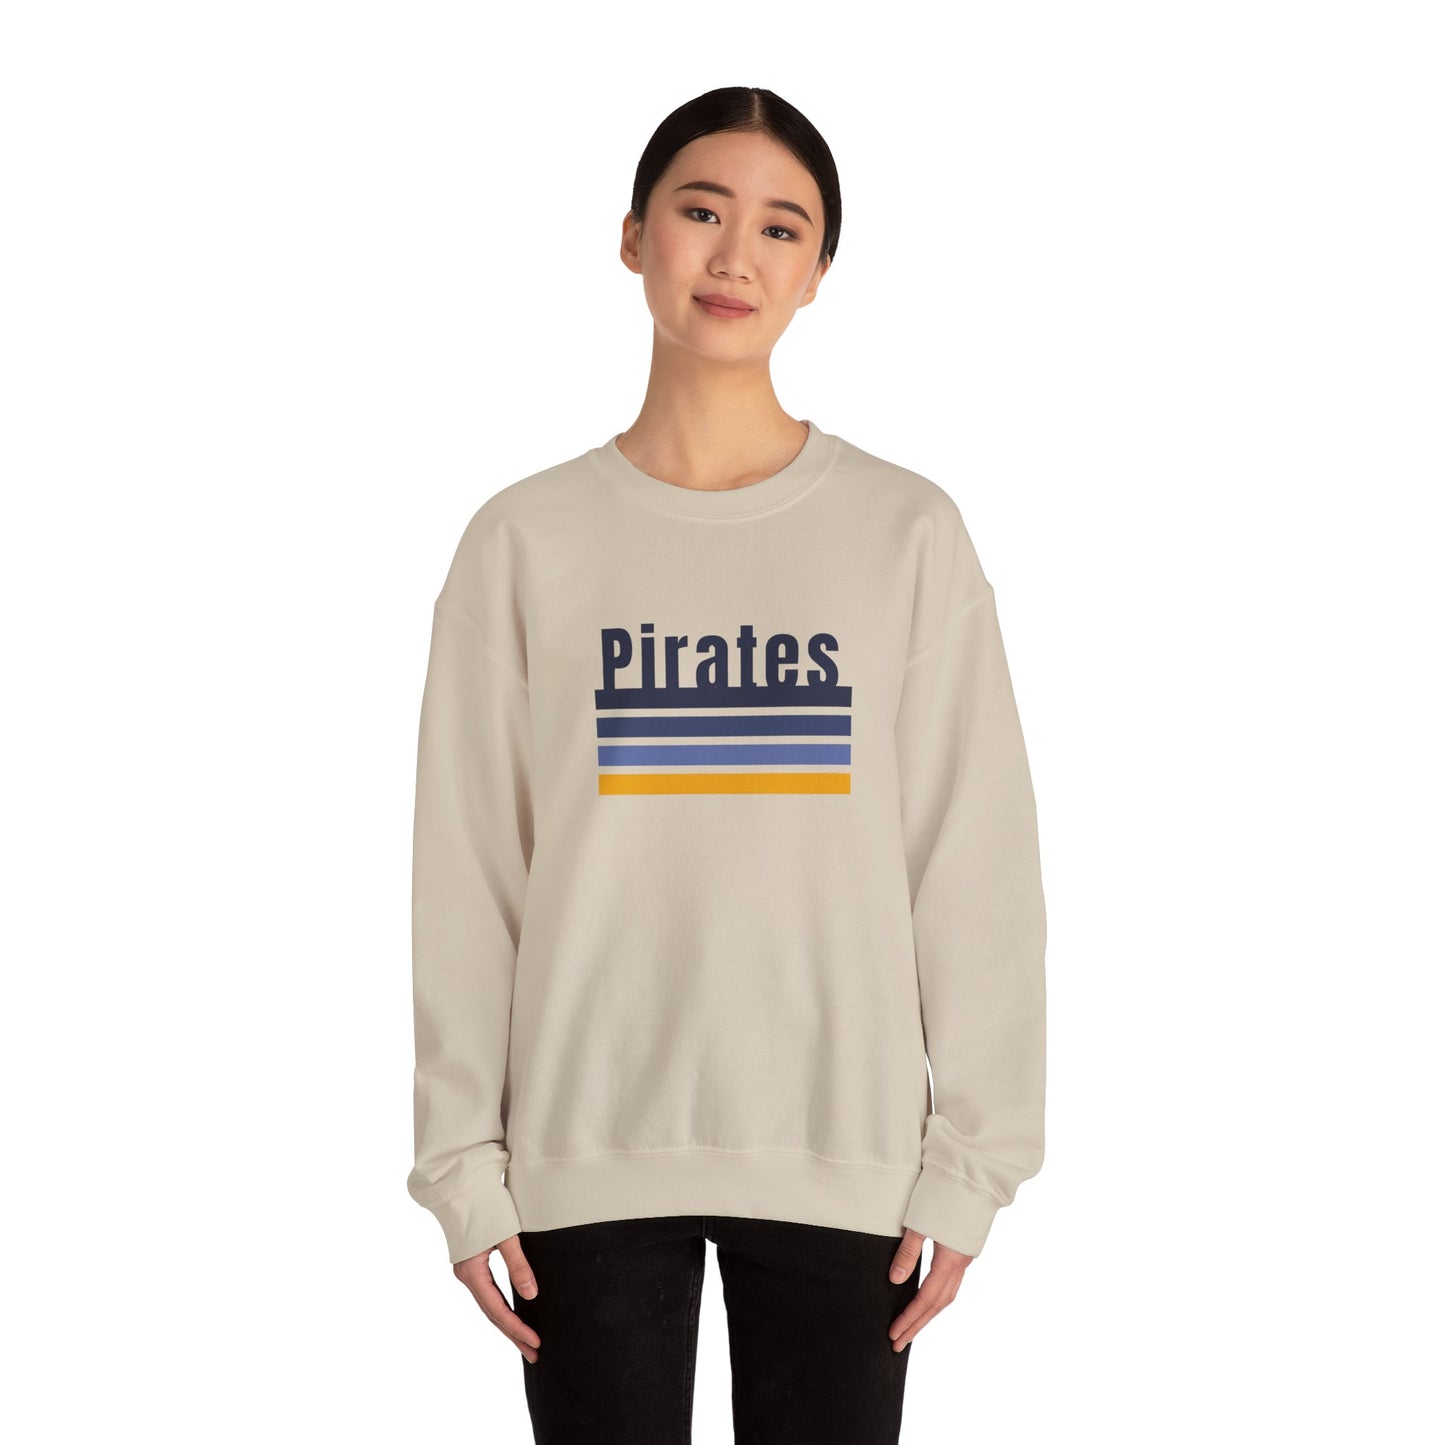 Pirates Gildan Crewneck Sweatshirt